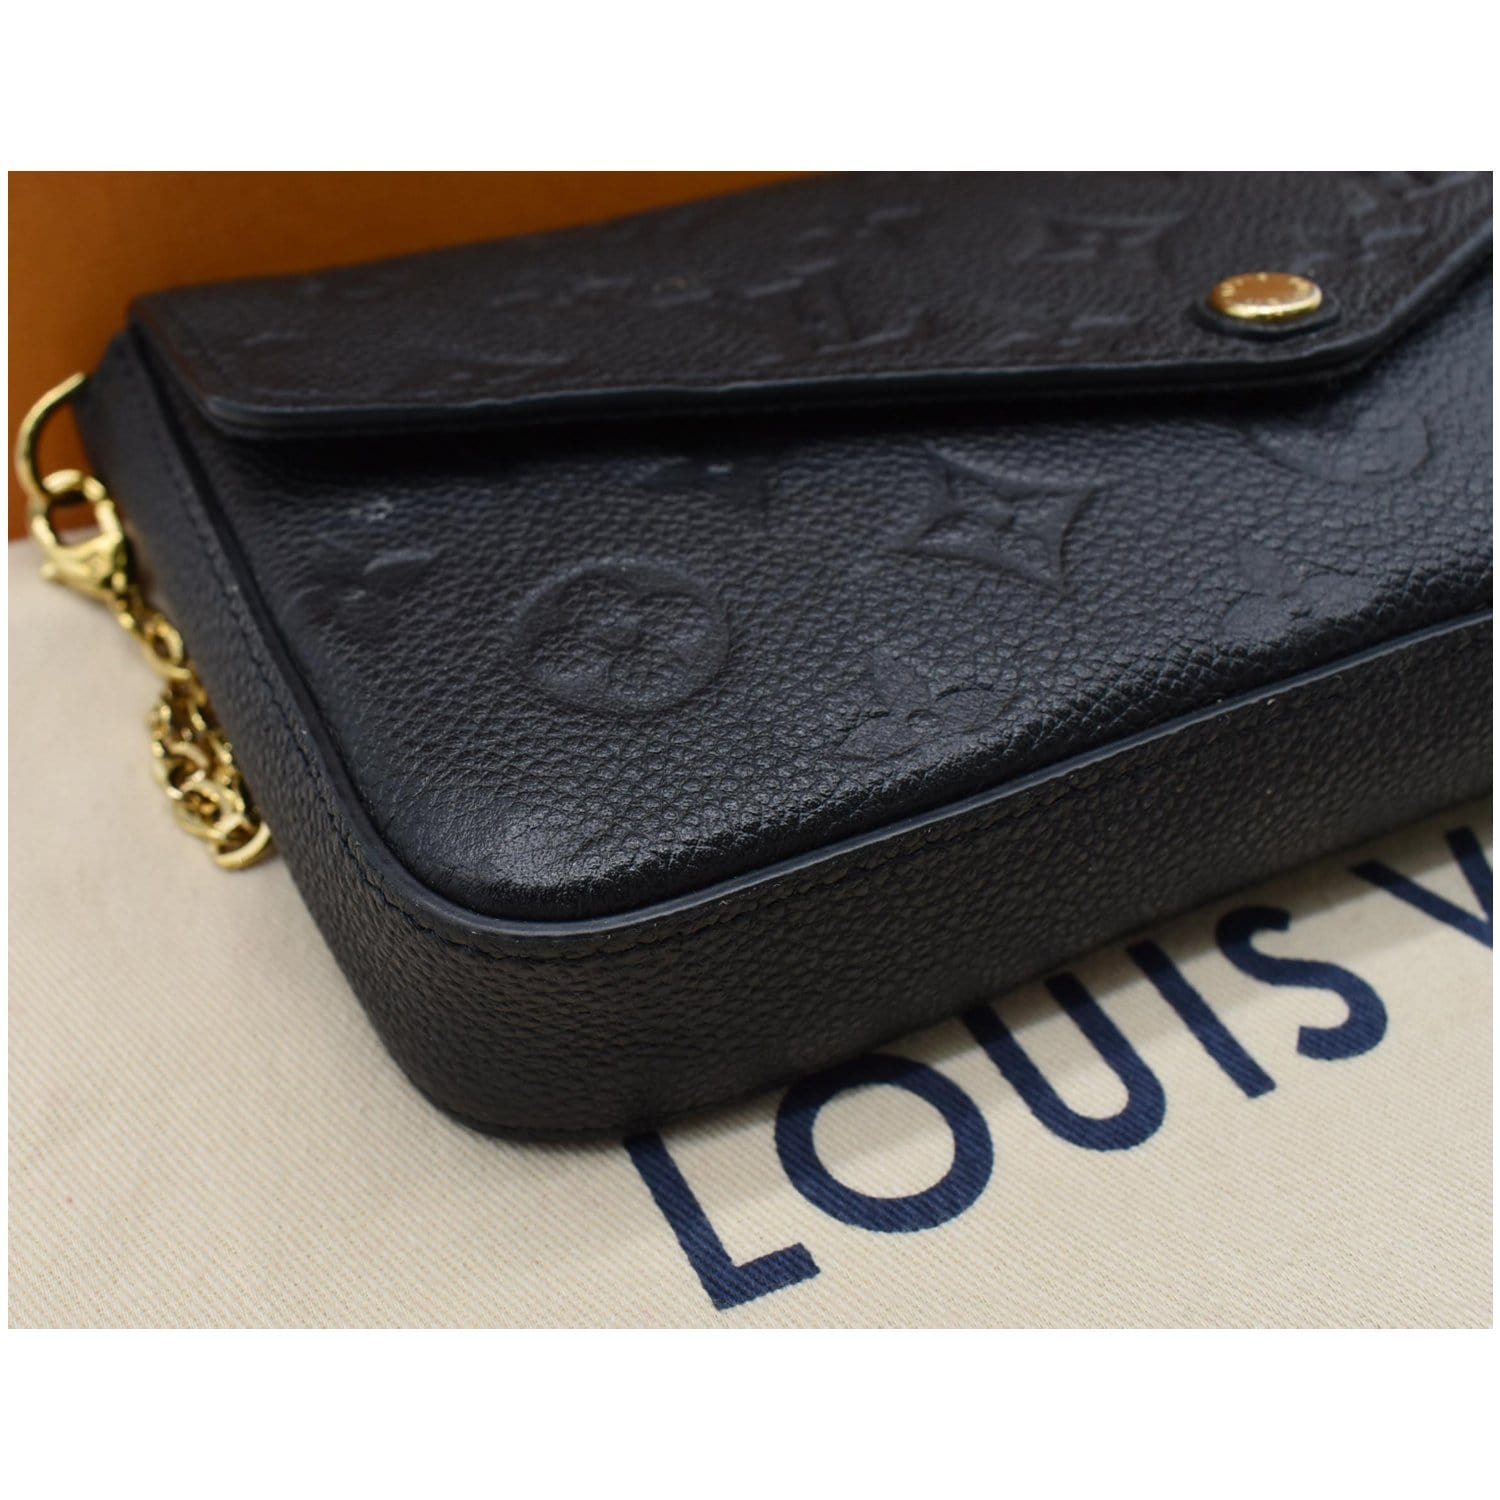 Replying to @Natalie Garcia✨ The new Pochette Métis East West! 🥰$3100, Louis Vuitton Pochette